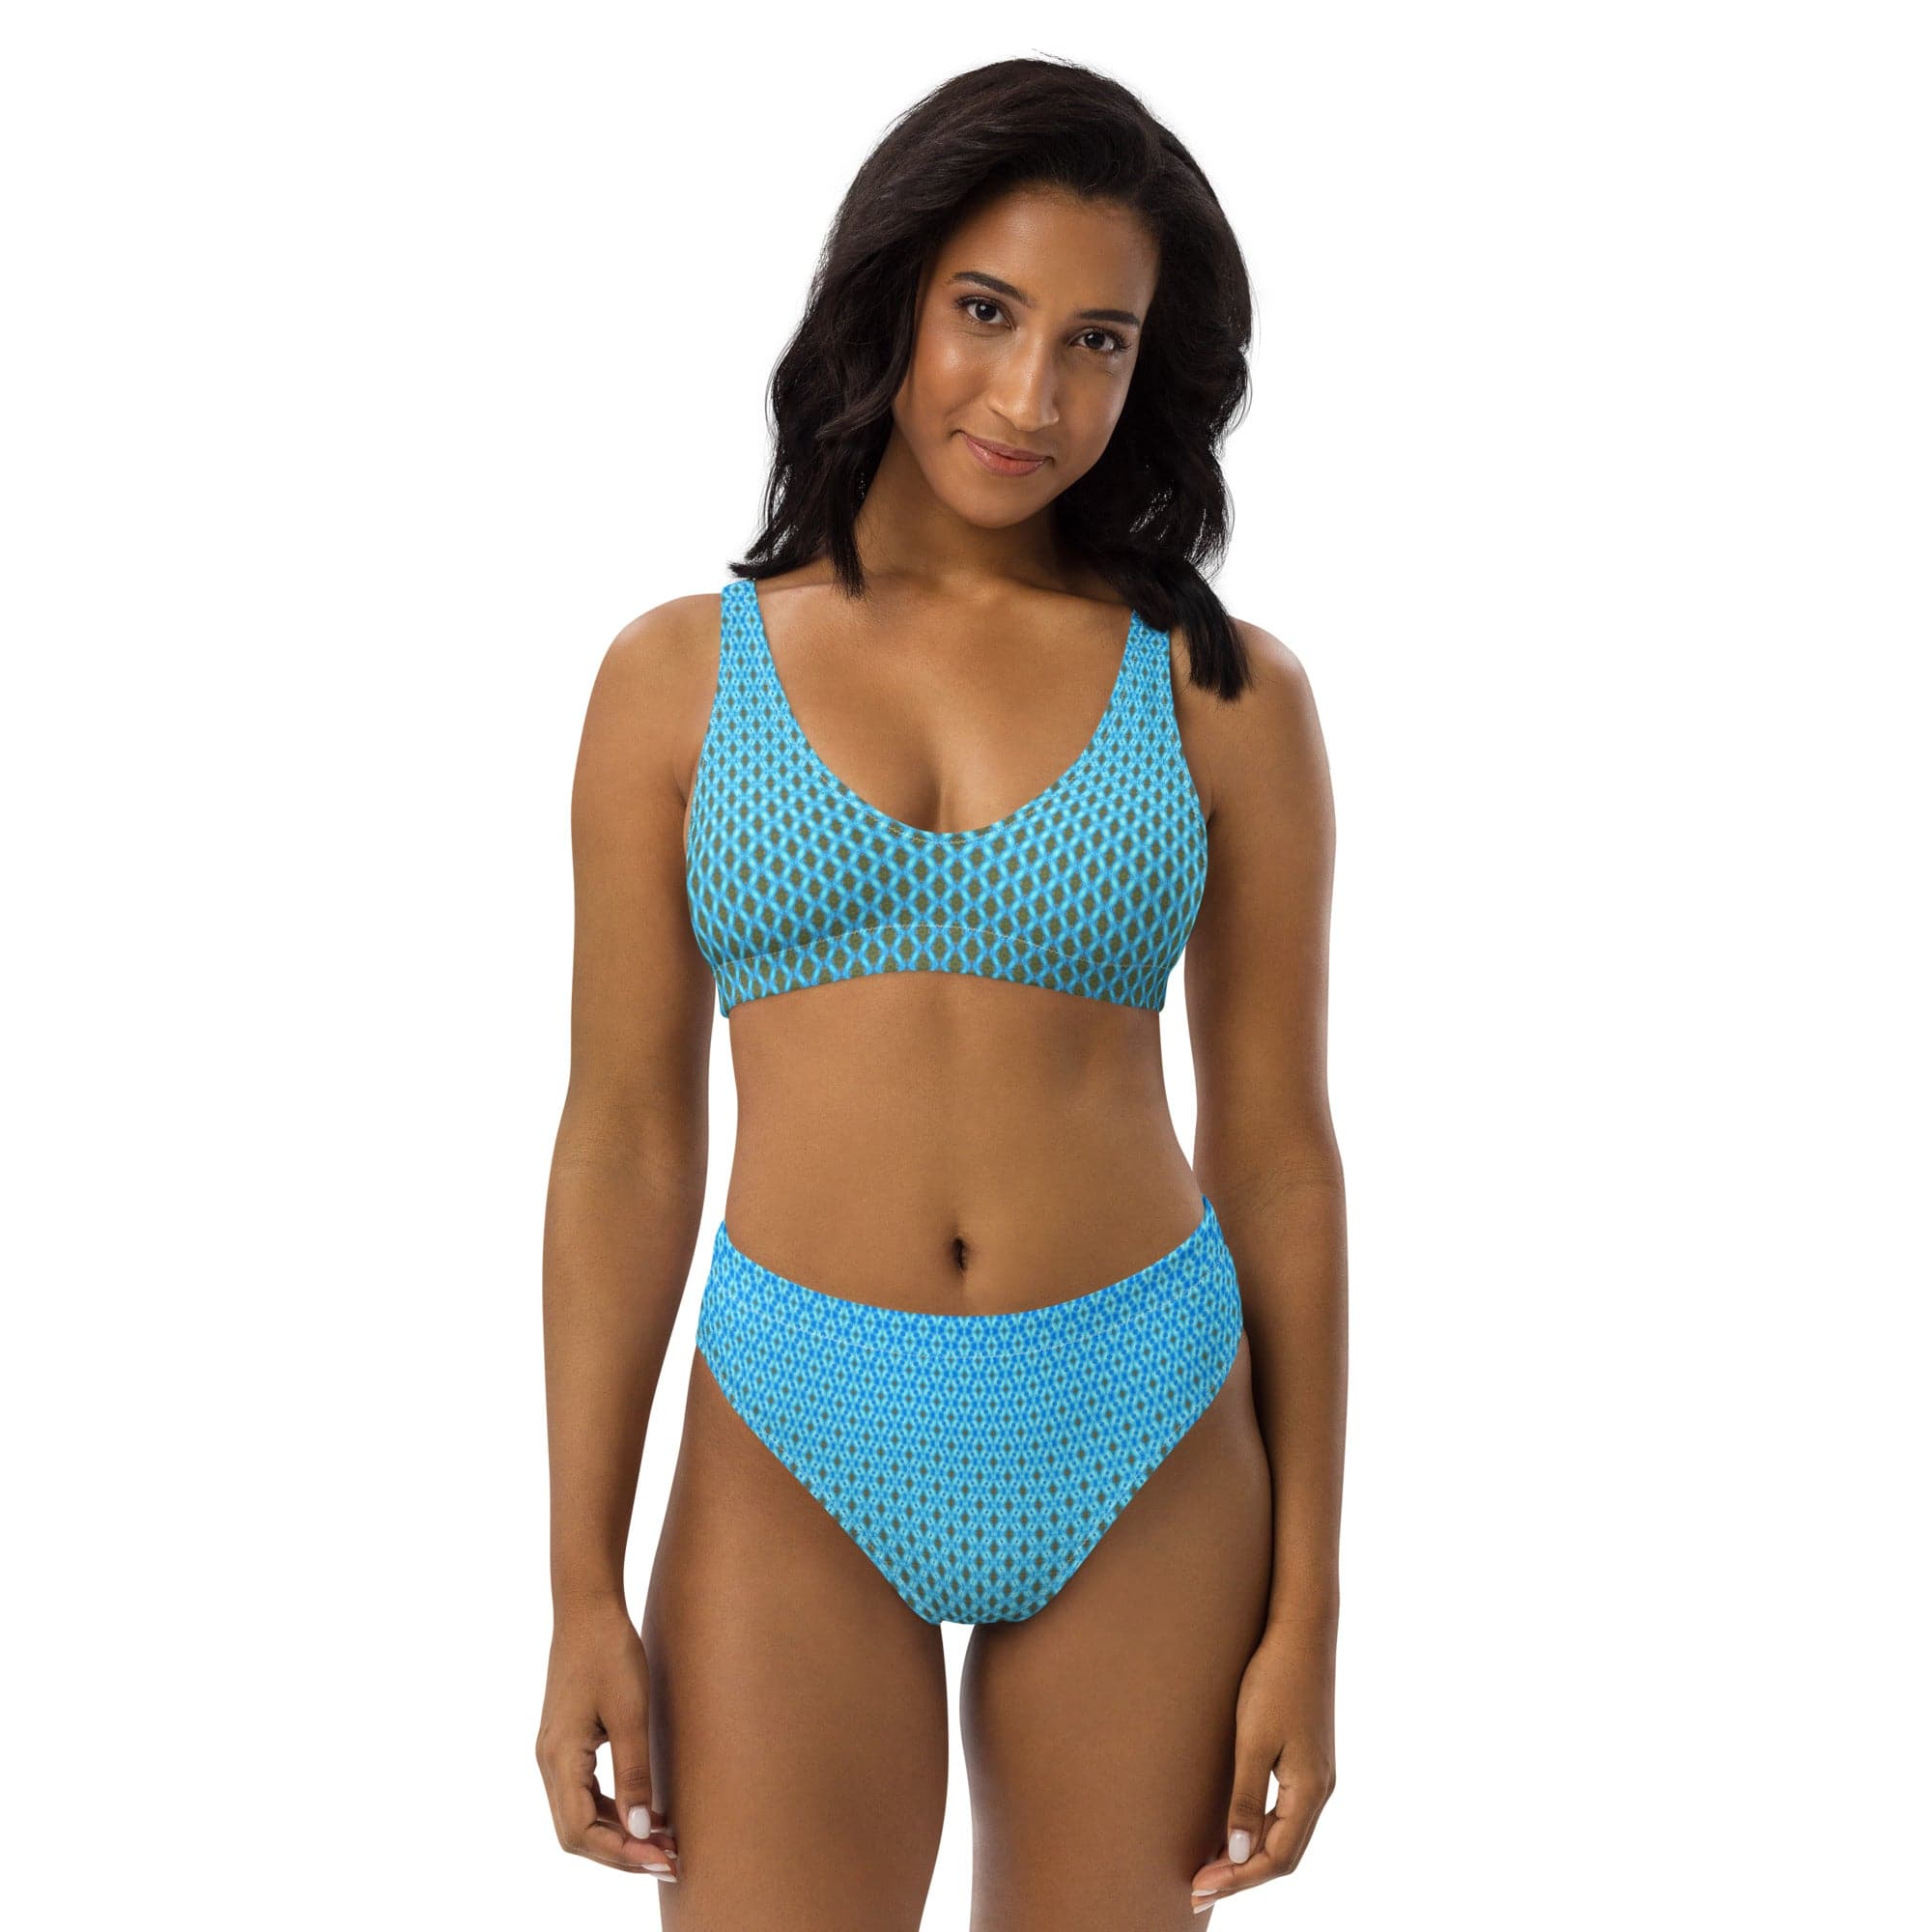 Atlantic Blue fine patterned Recycled high-waisted bikini, by Sensus Studio Design